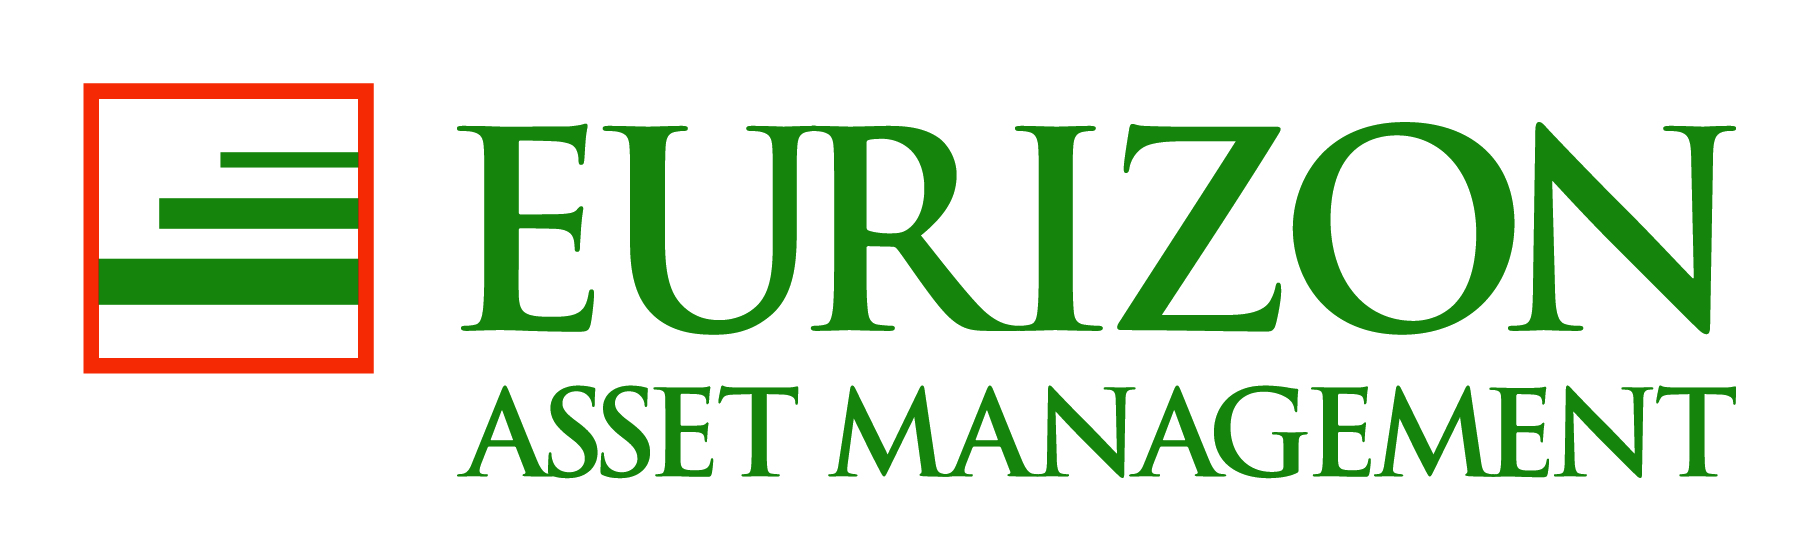 Logo of Eurizon Asset Management